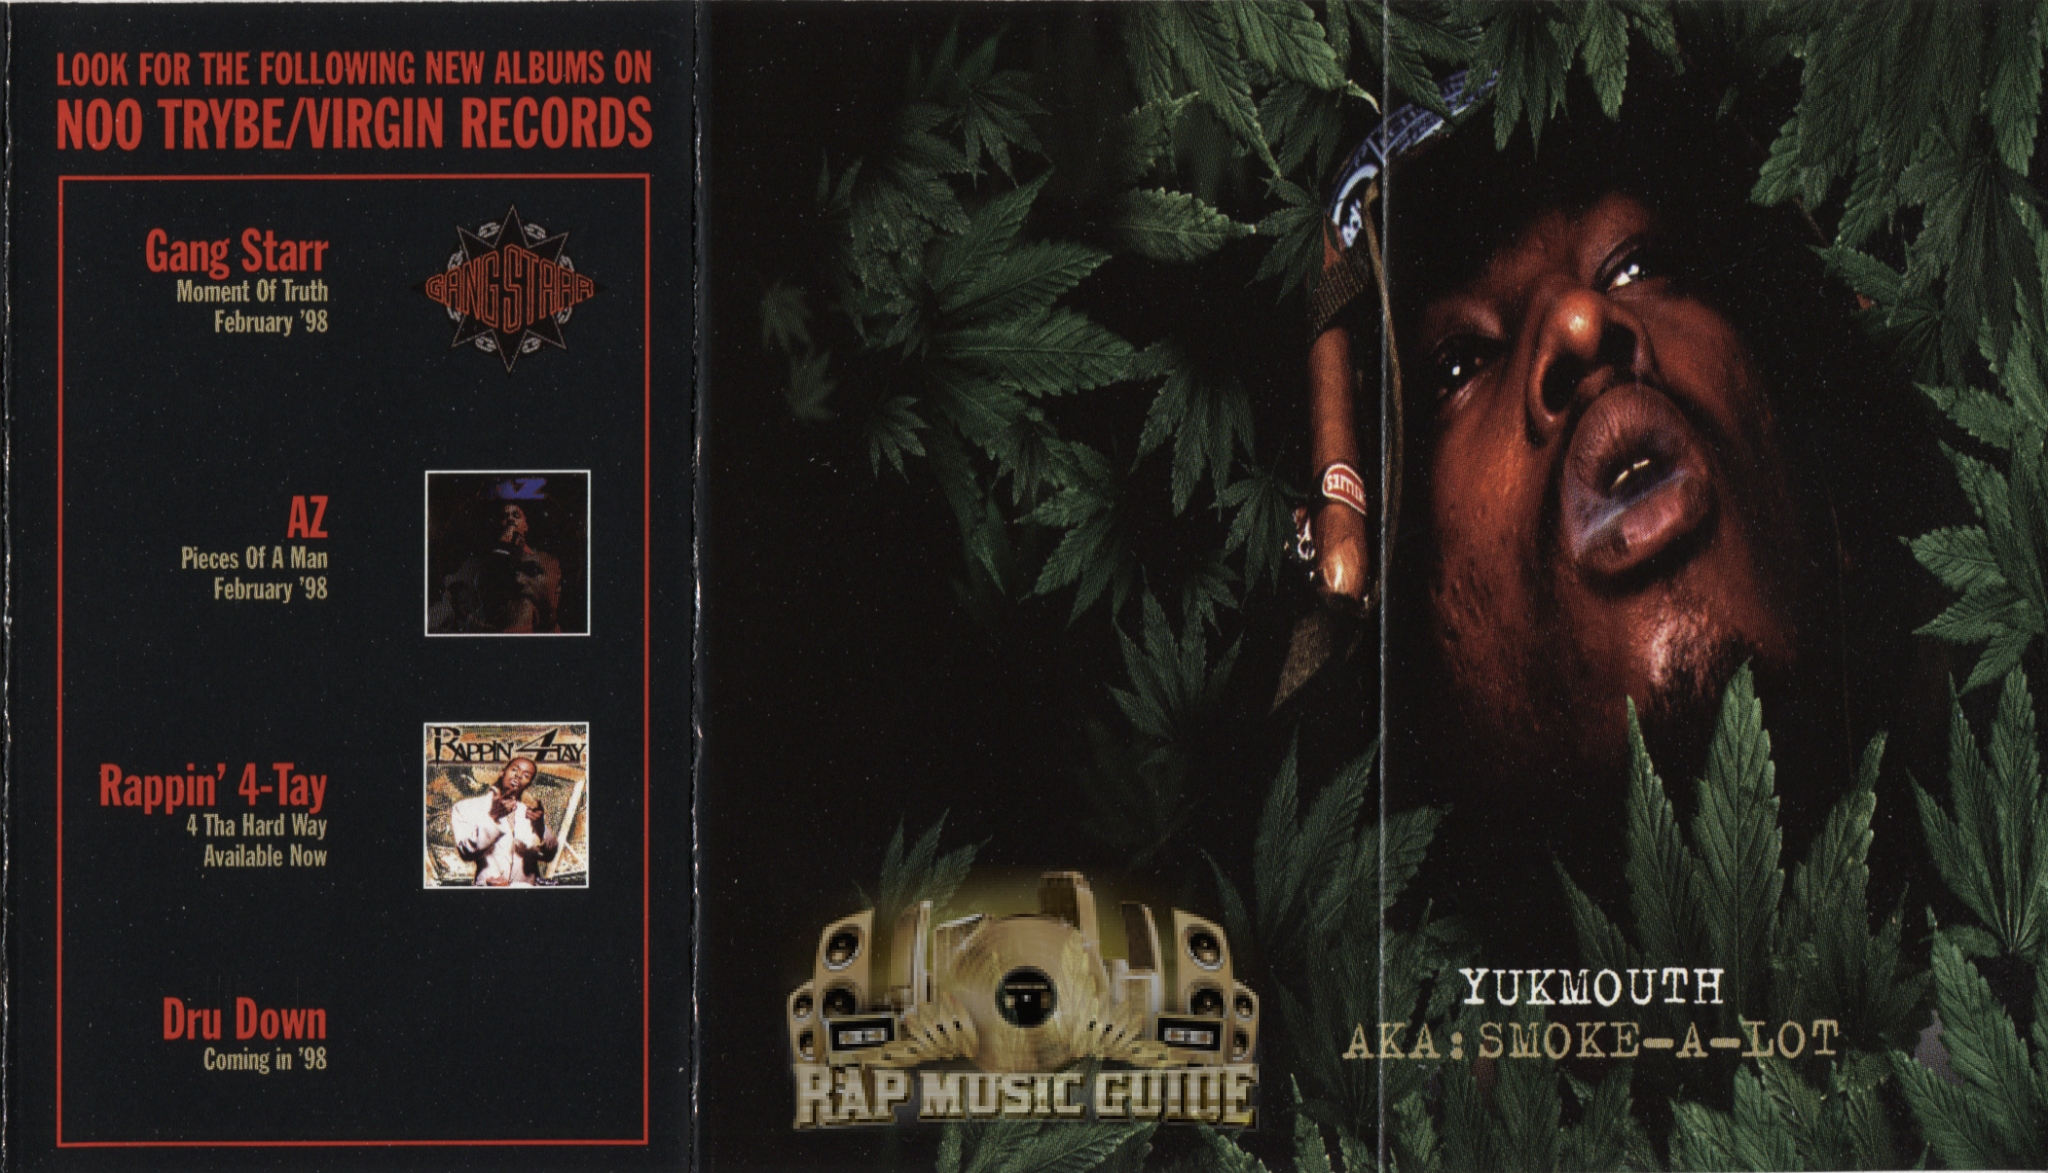 Luniz - Lunitik Muzik: Cassette Tape | Rap Music Guide